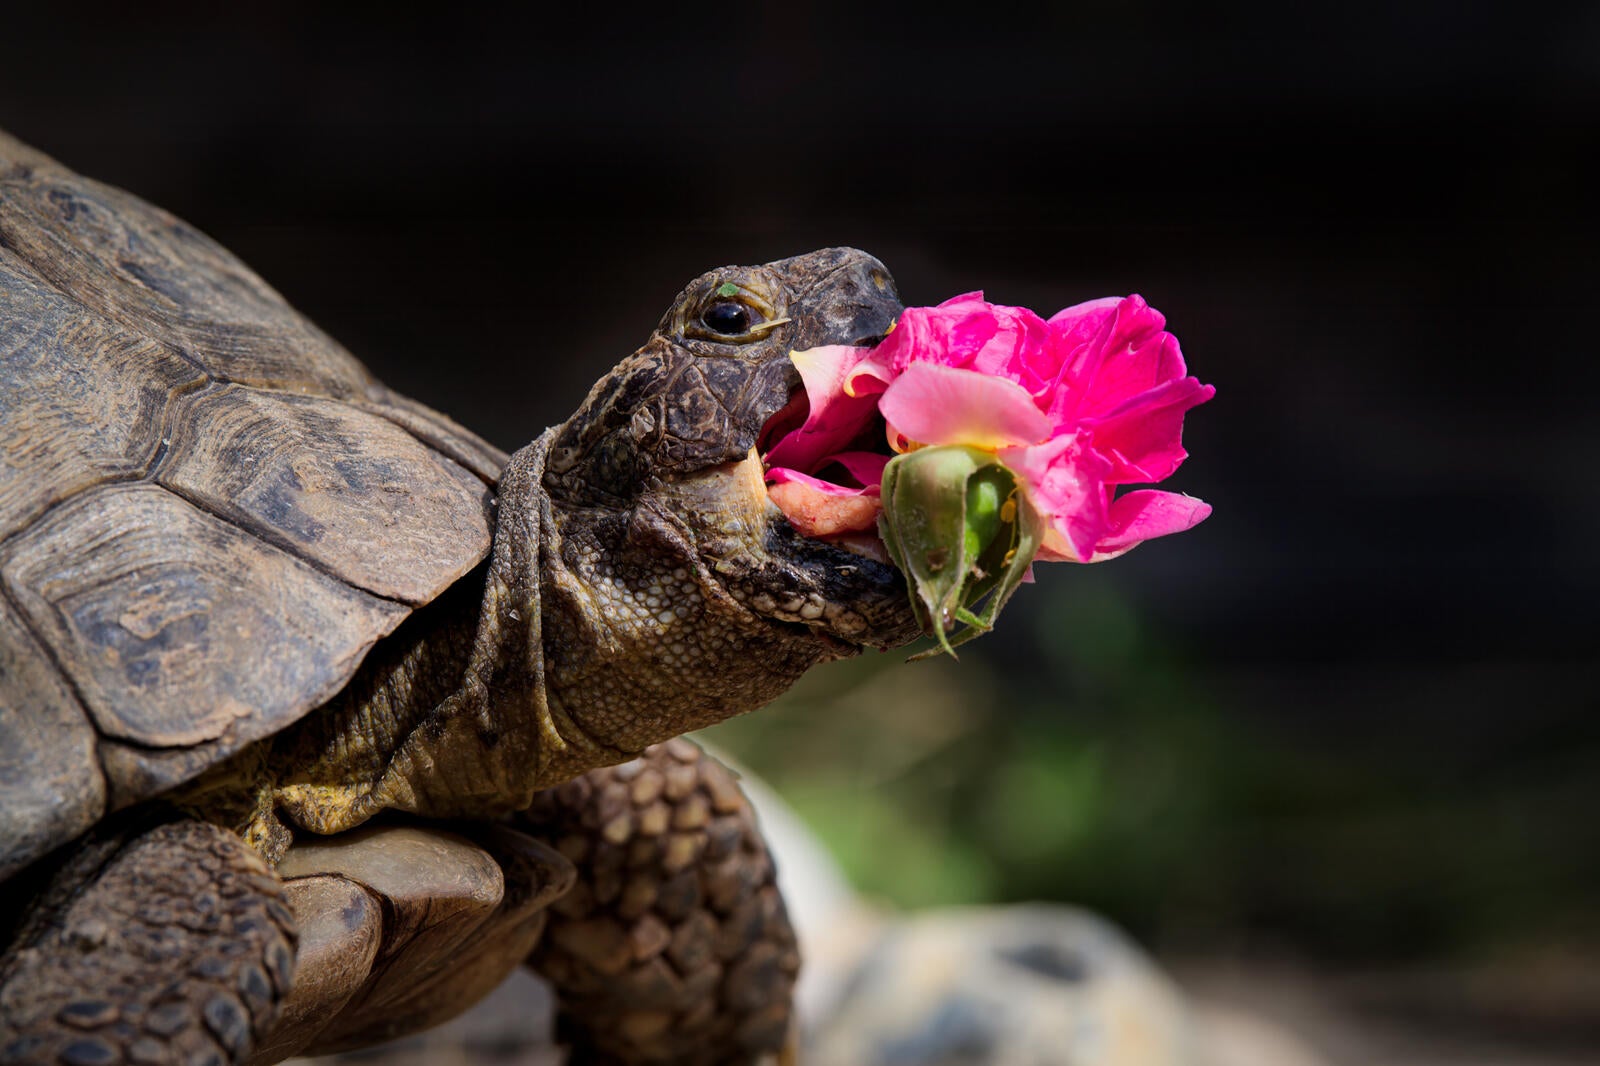 Tartaruga comendo flor rosa